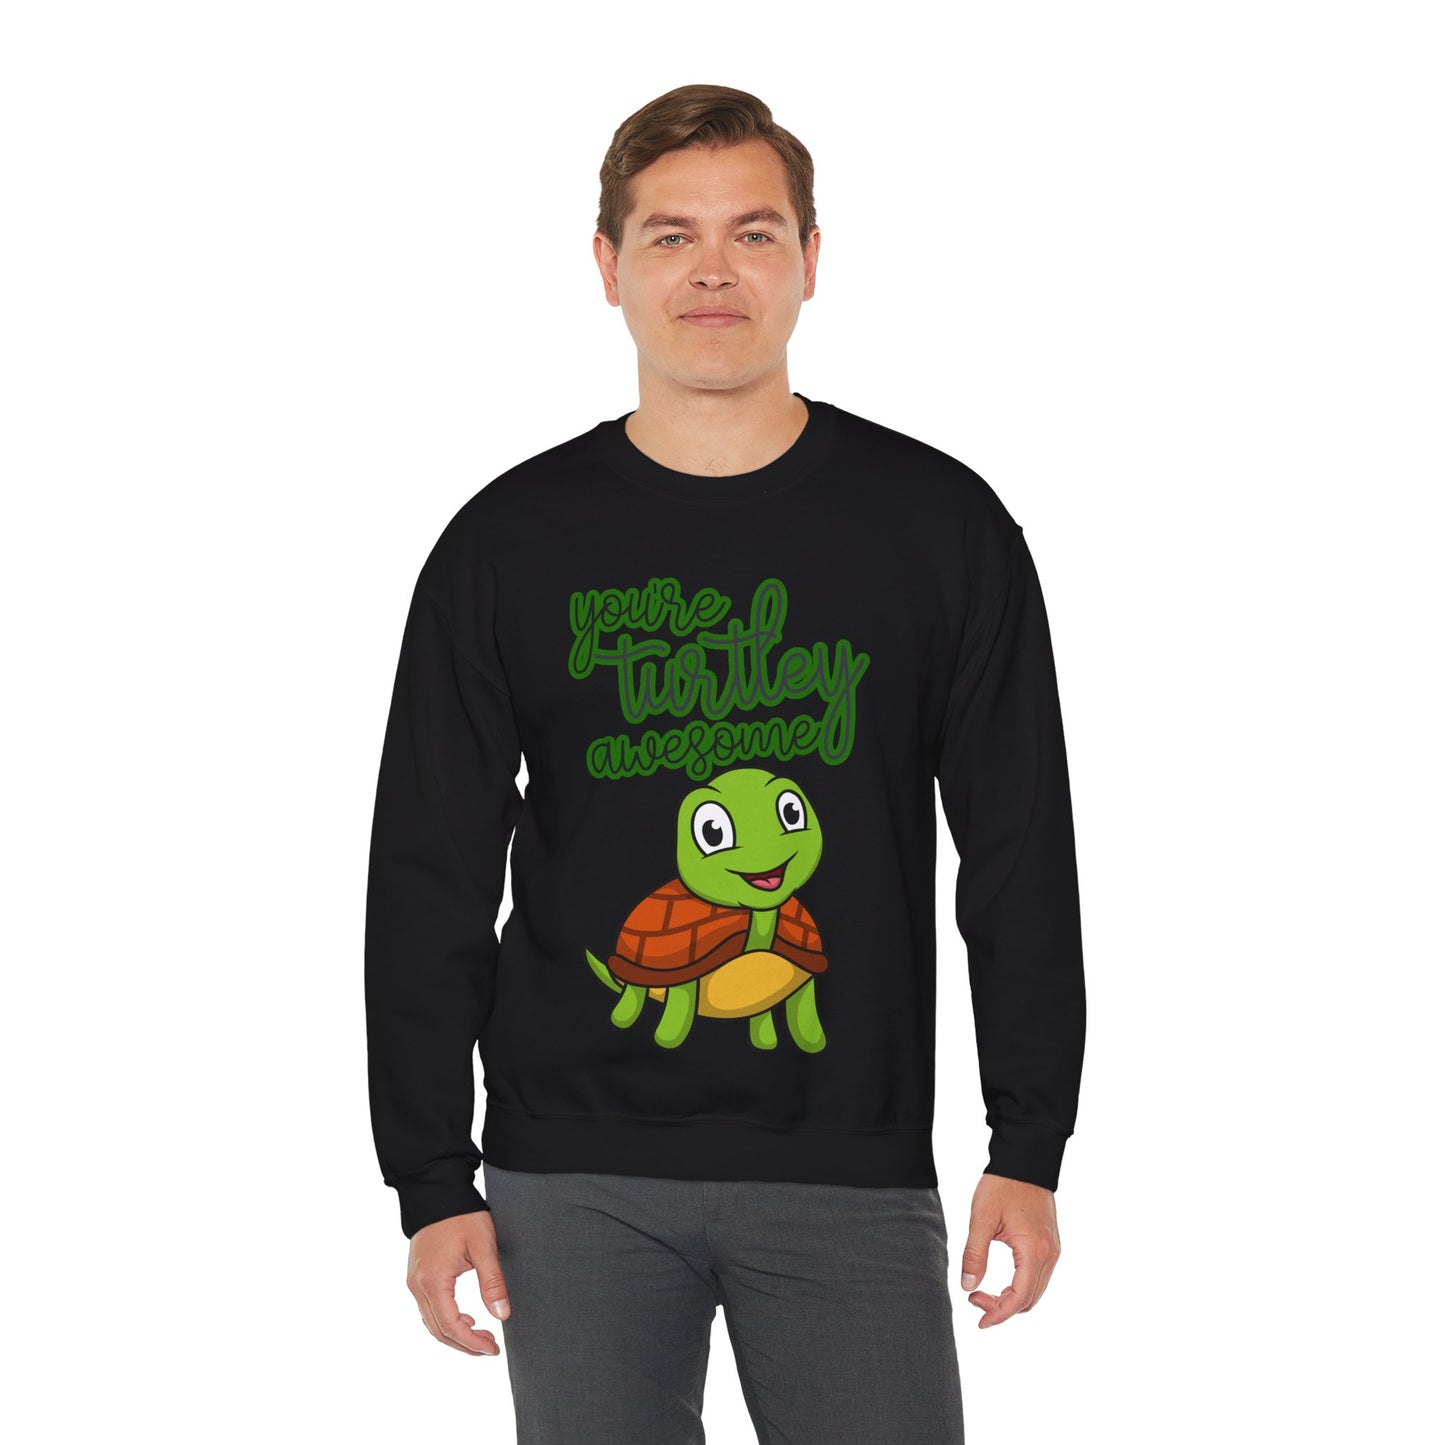 You're Turtley Awesome Sweatshirt